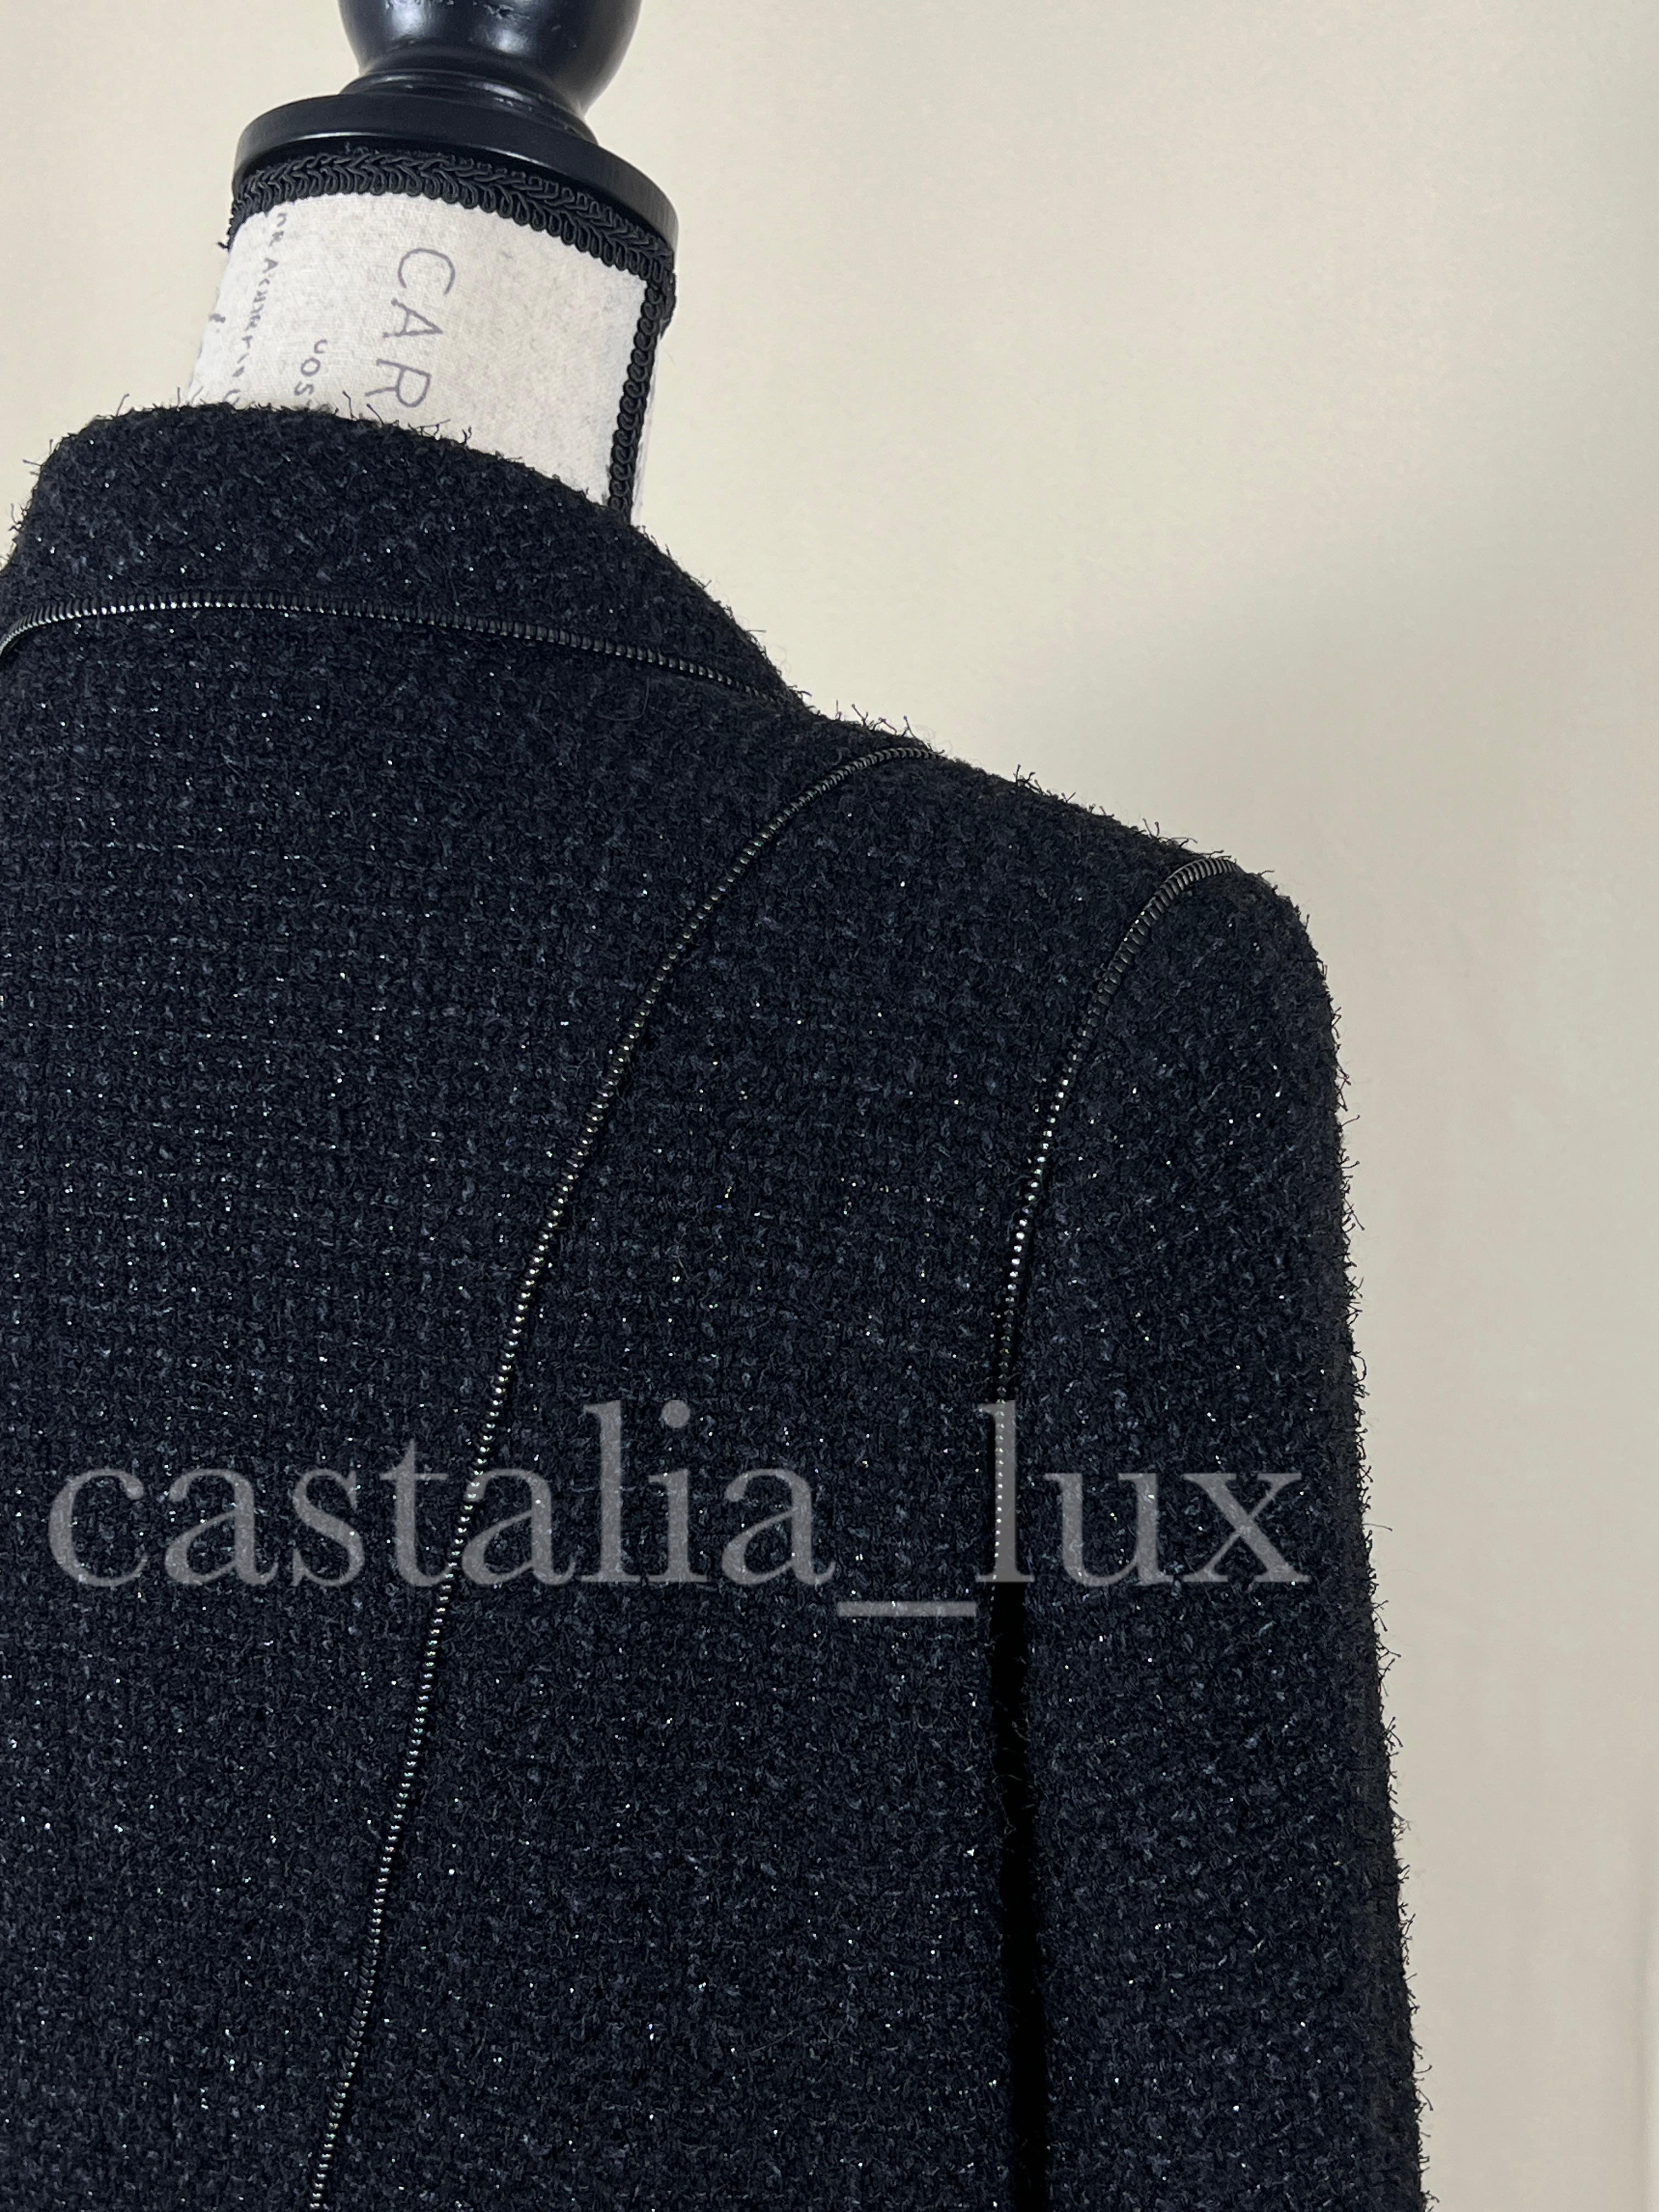 Chanel CC Jewel Gripoix Buttons Black Tweed Jacket 11